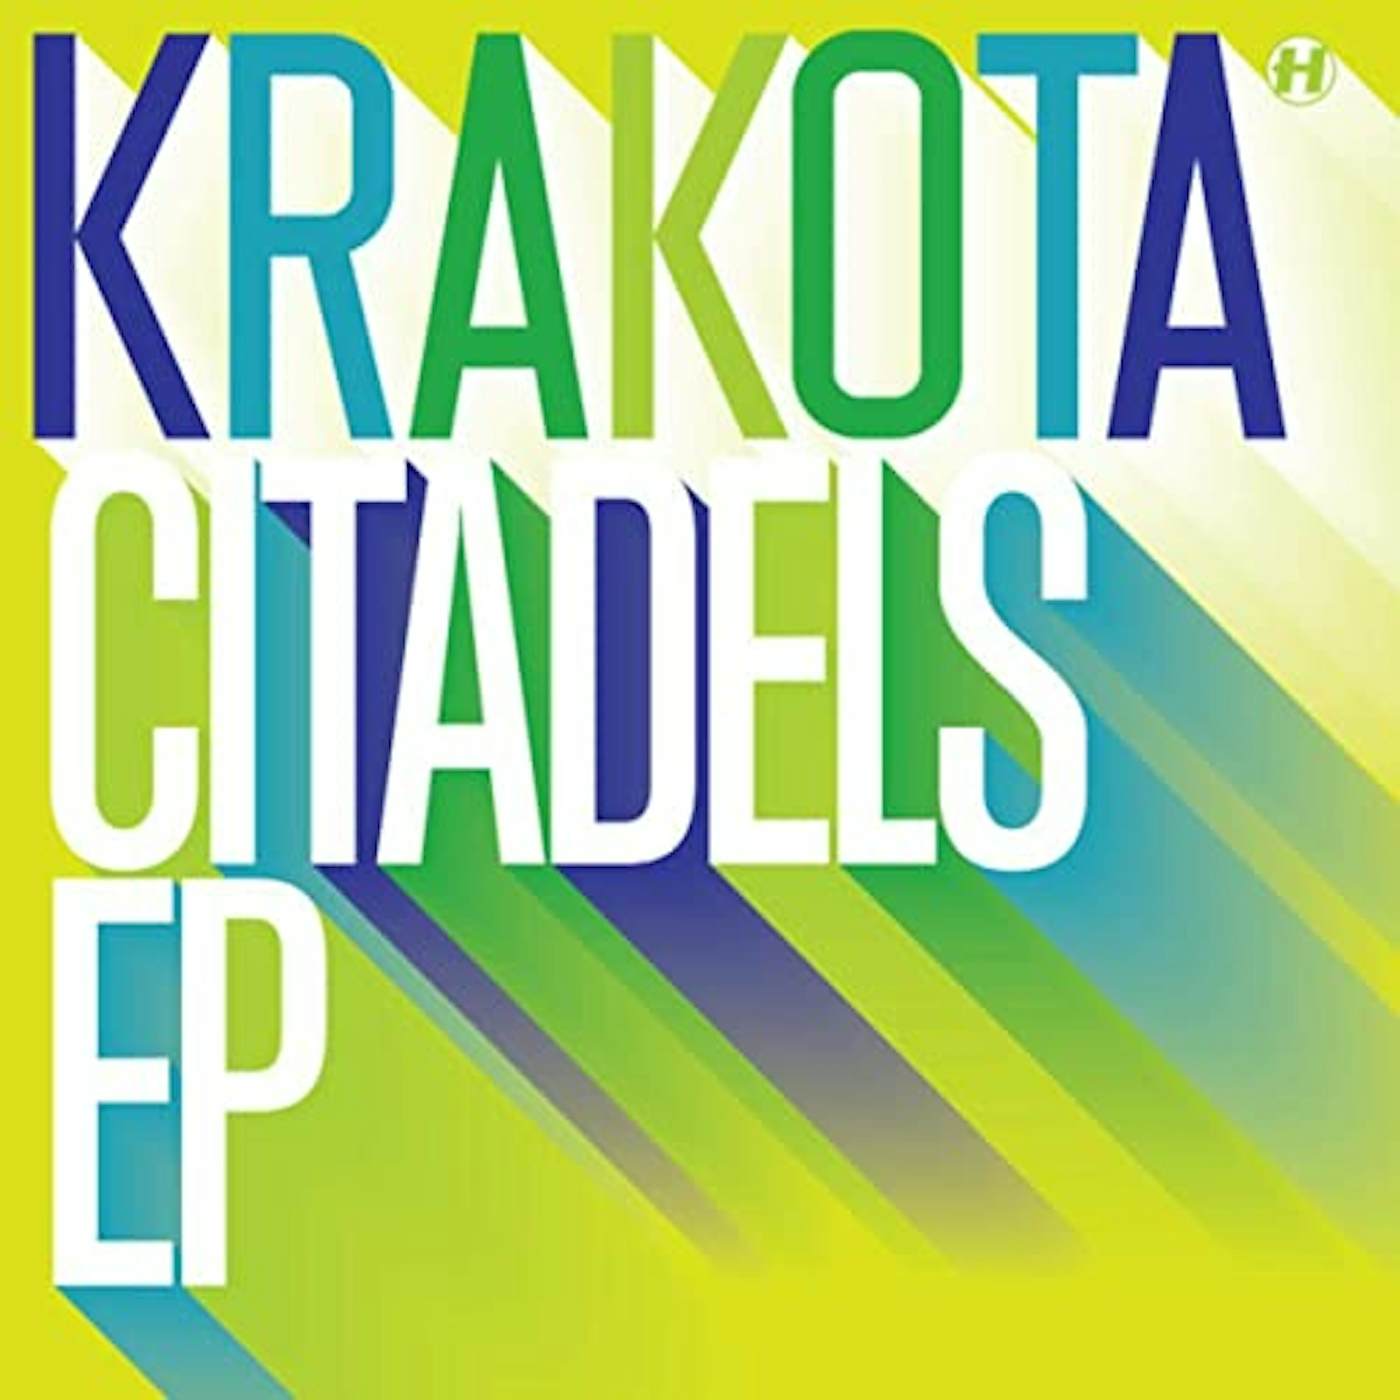 Krakota Citadels Ep Vinyl Record